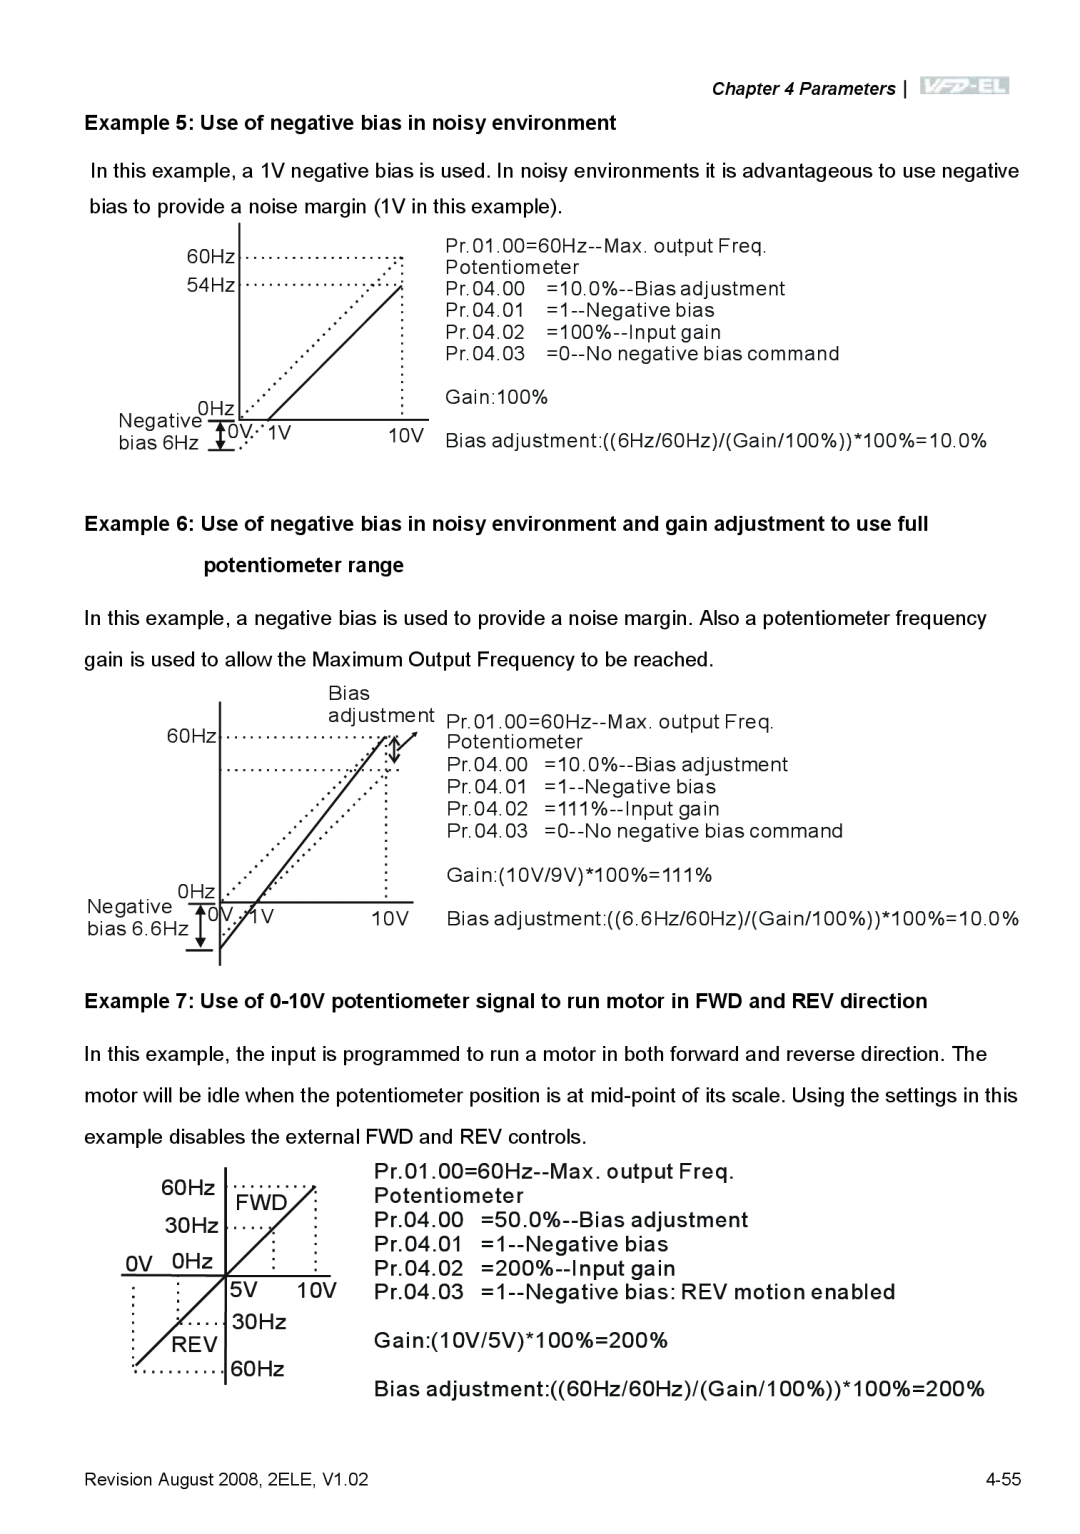 Delta Electronics VFD-EL manual Example 5 Use of negative bias in noisy environment, potentiometer range 